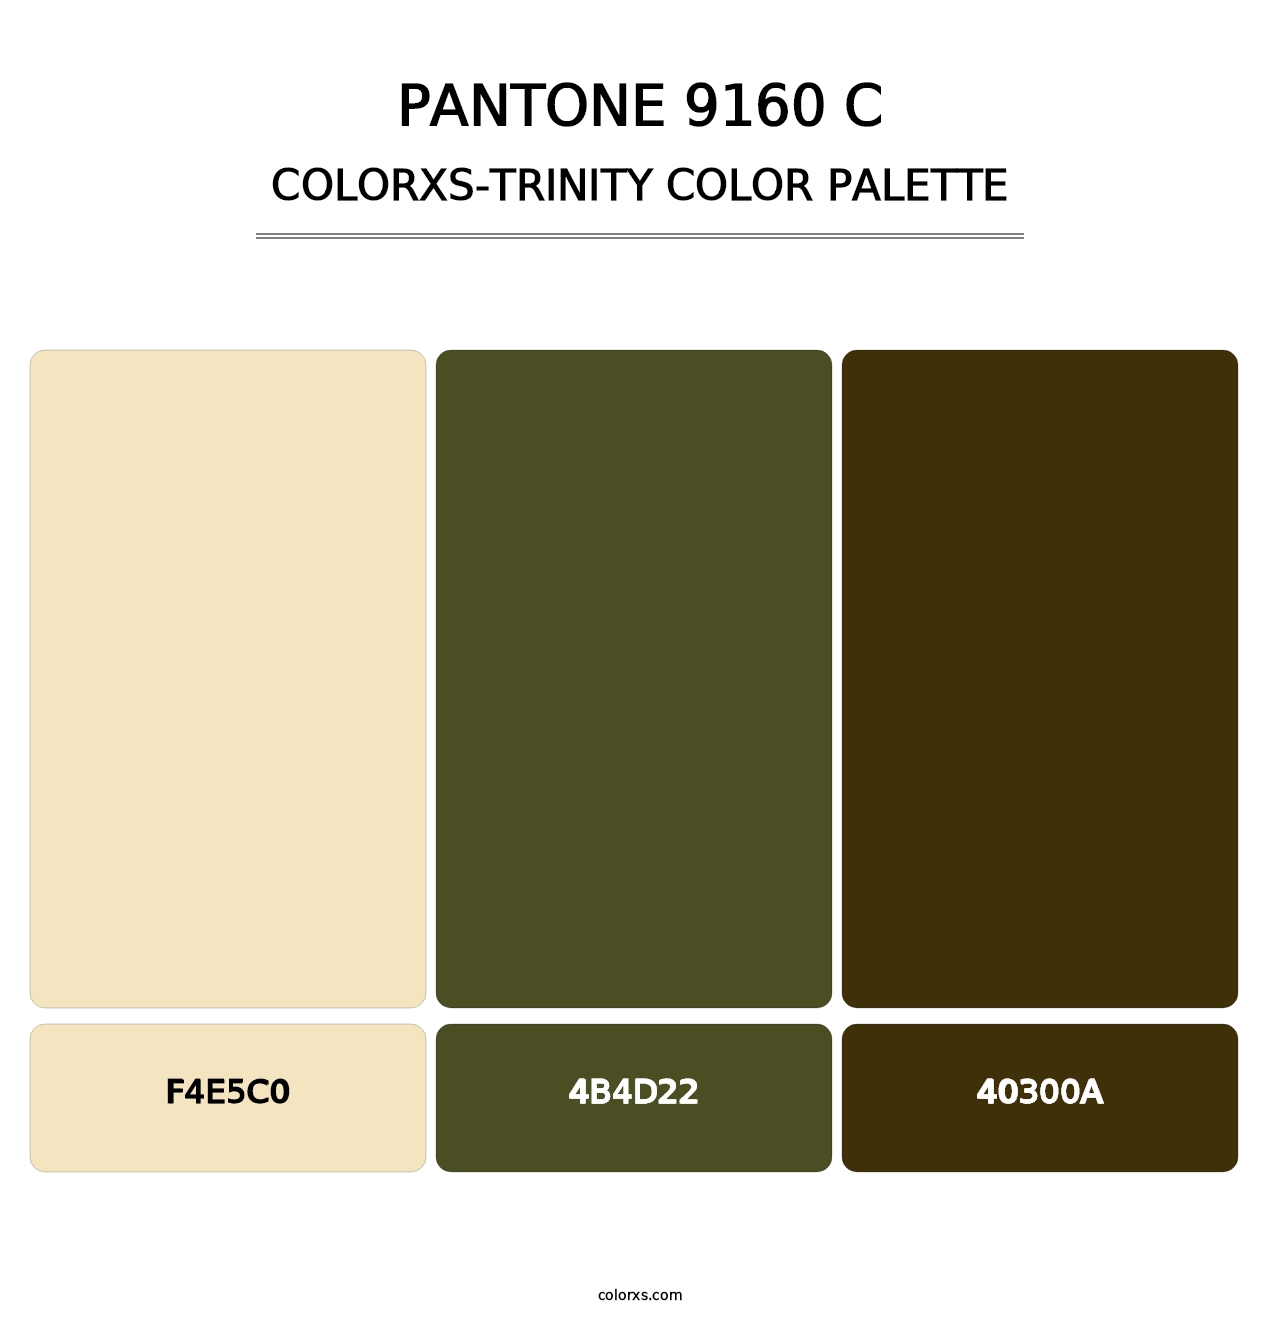 PANTONE 9160 C - Colorxs Trinity Palette